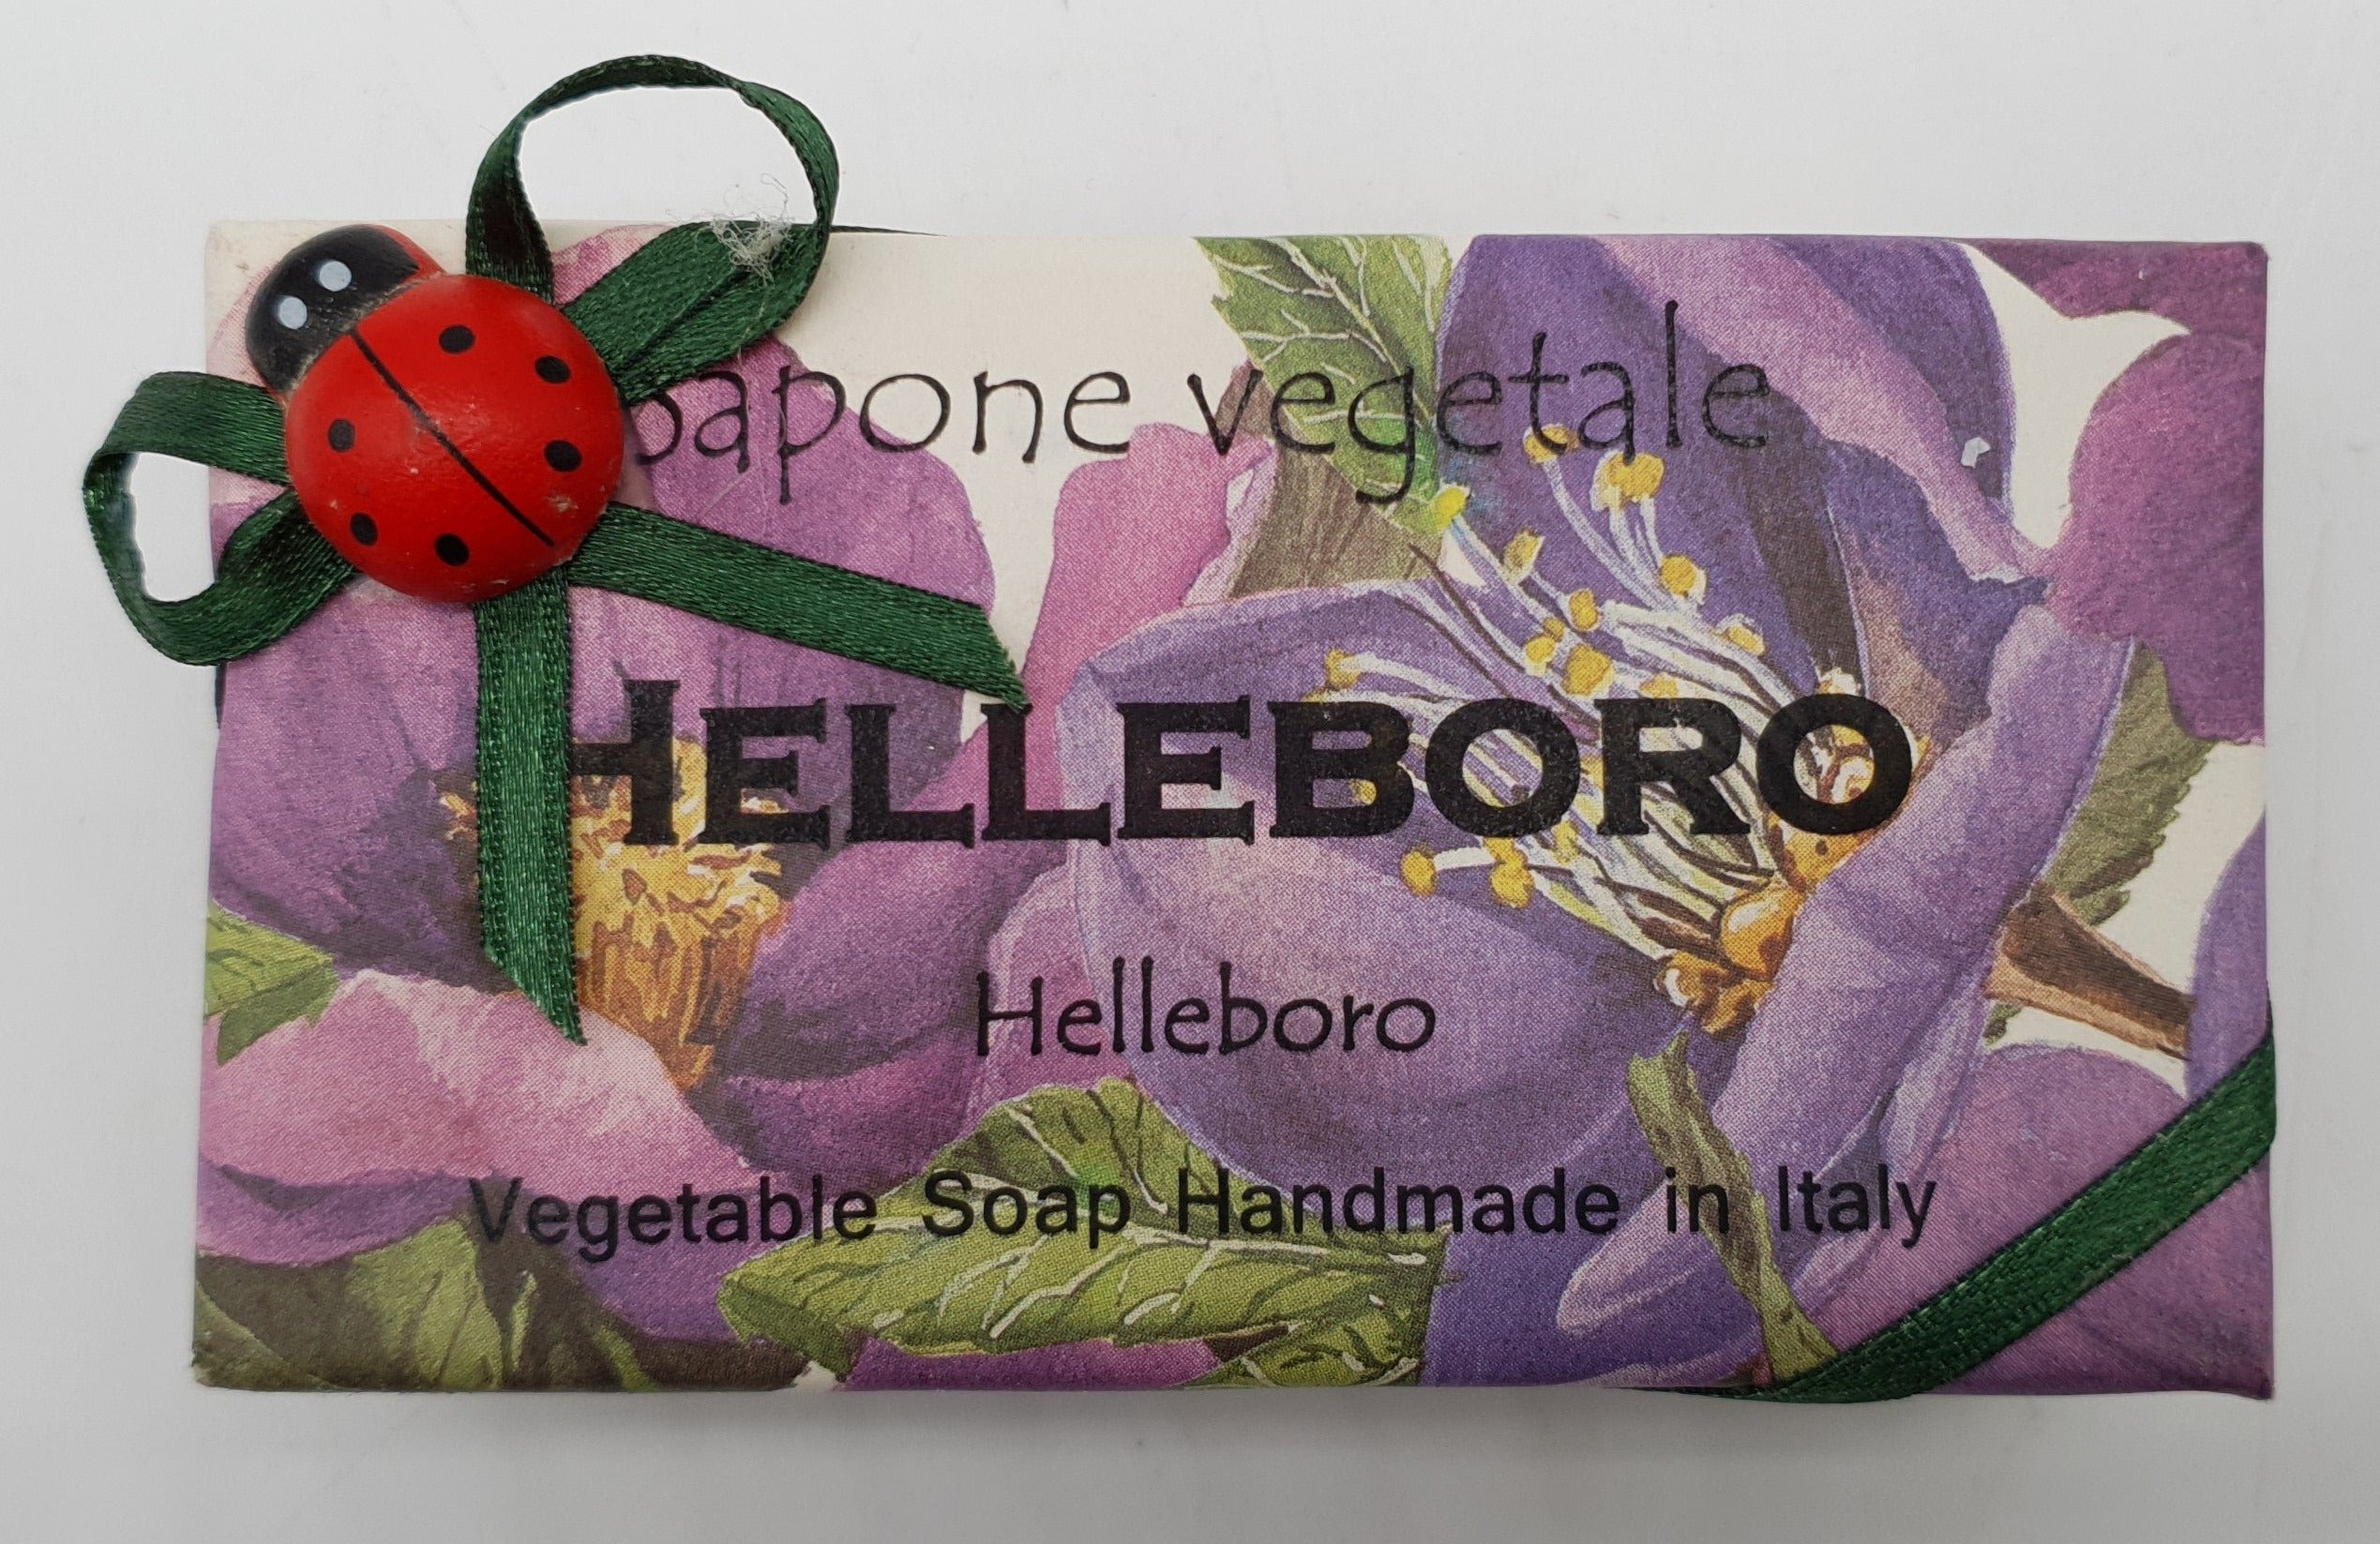 Sapone Vegetale Helleboro